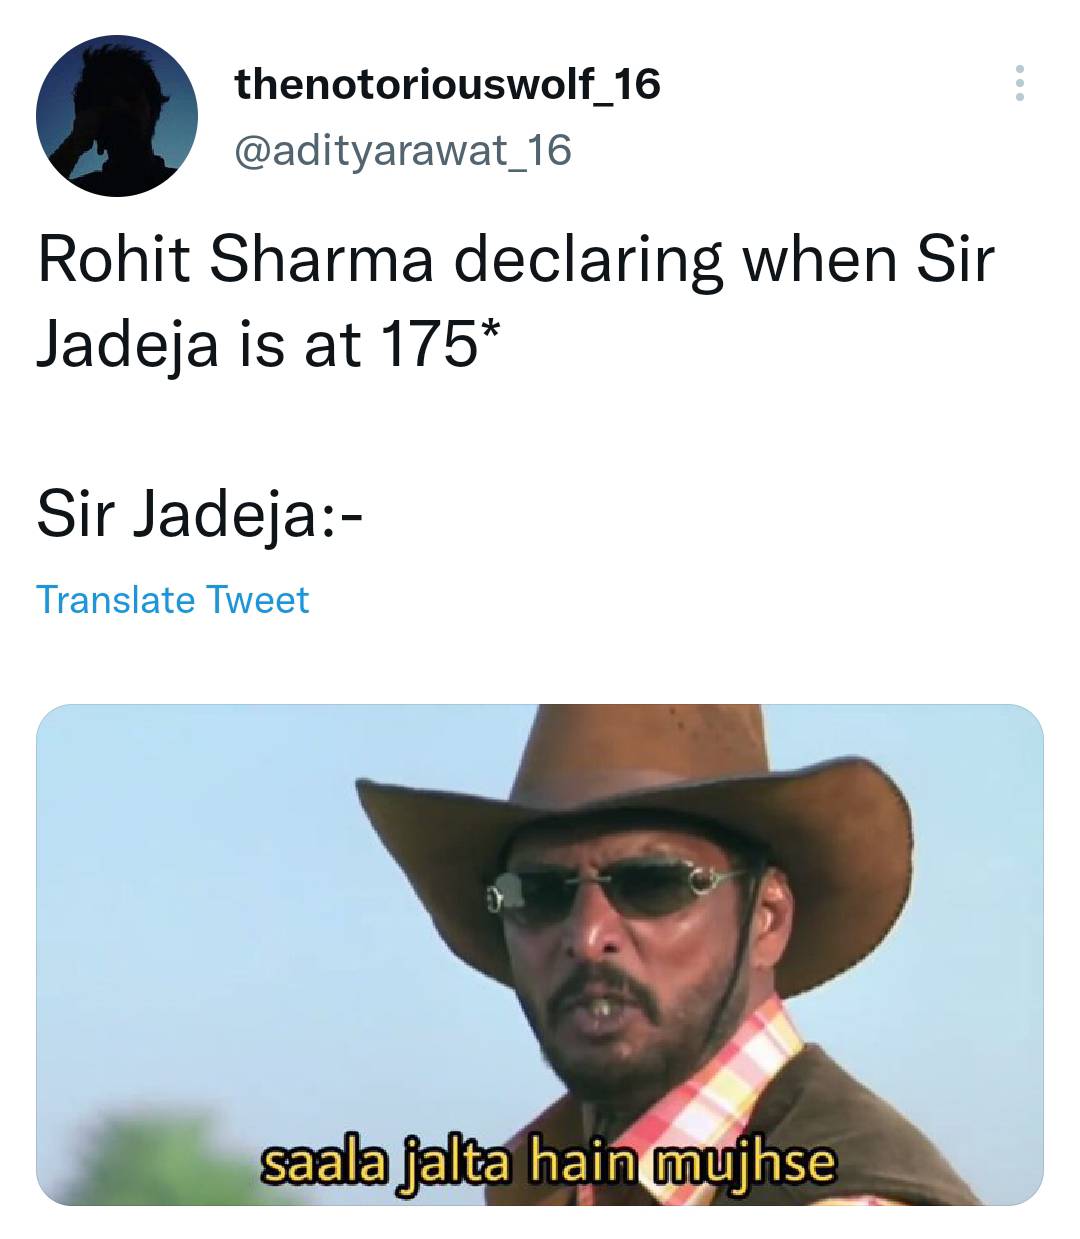 Rohit Sharma declaring when Sir Jadeja is at 175 Le Sir Jadeja: meme.jpg